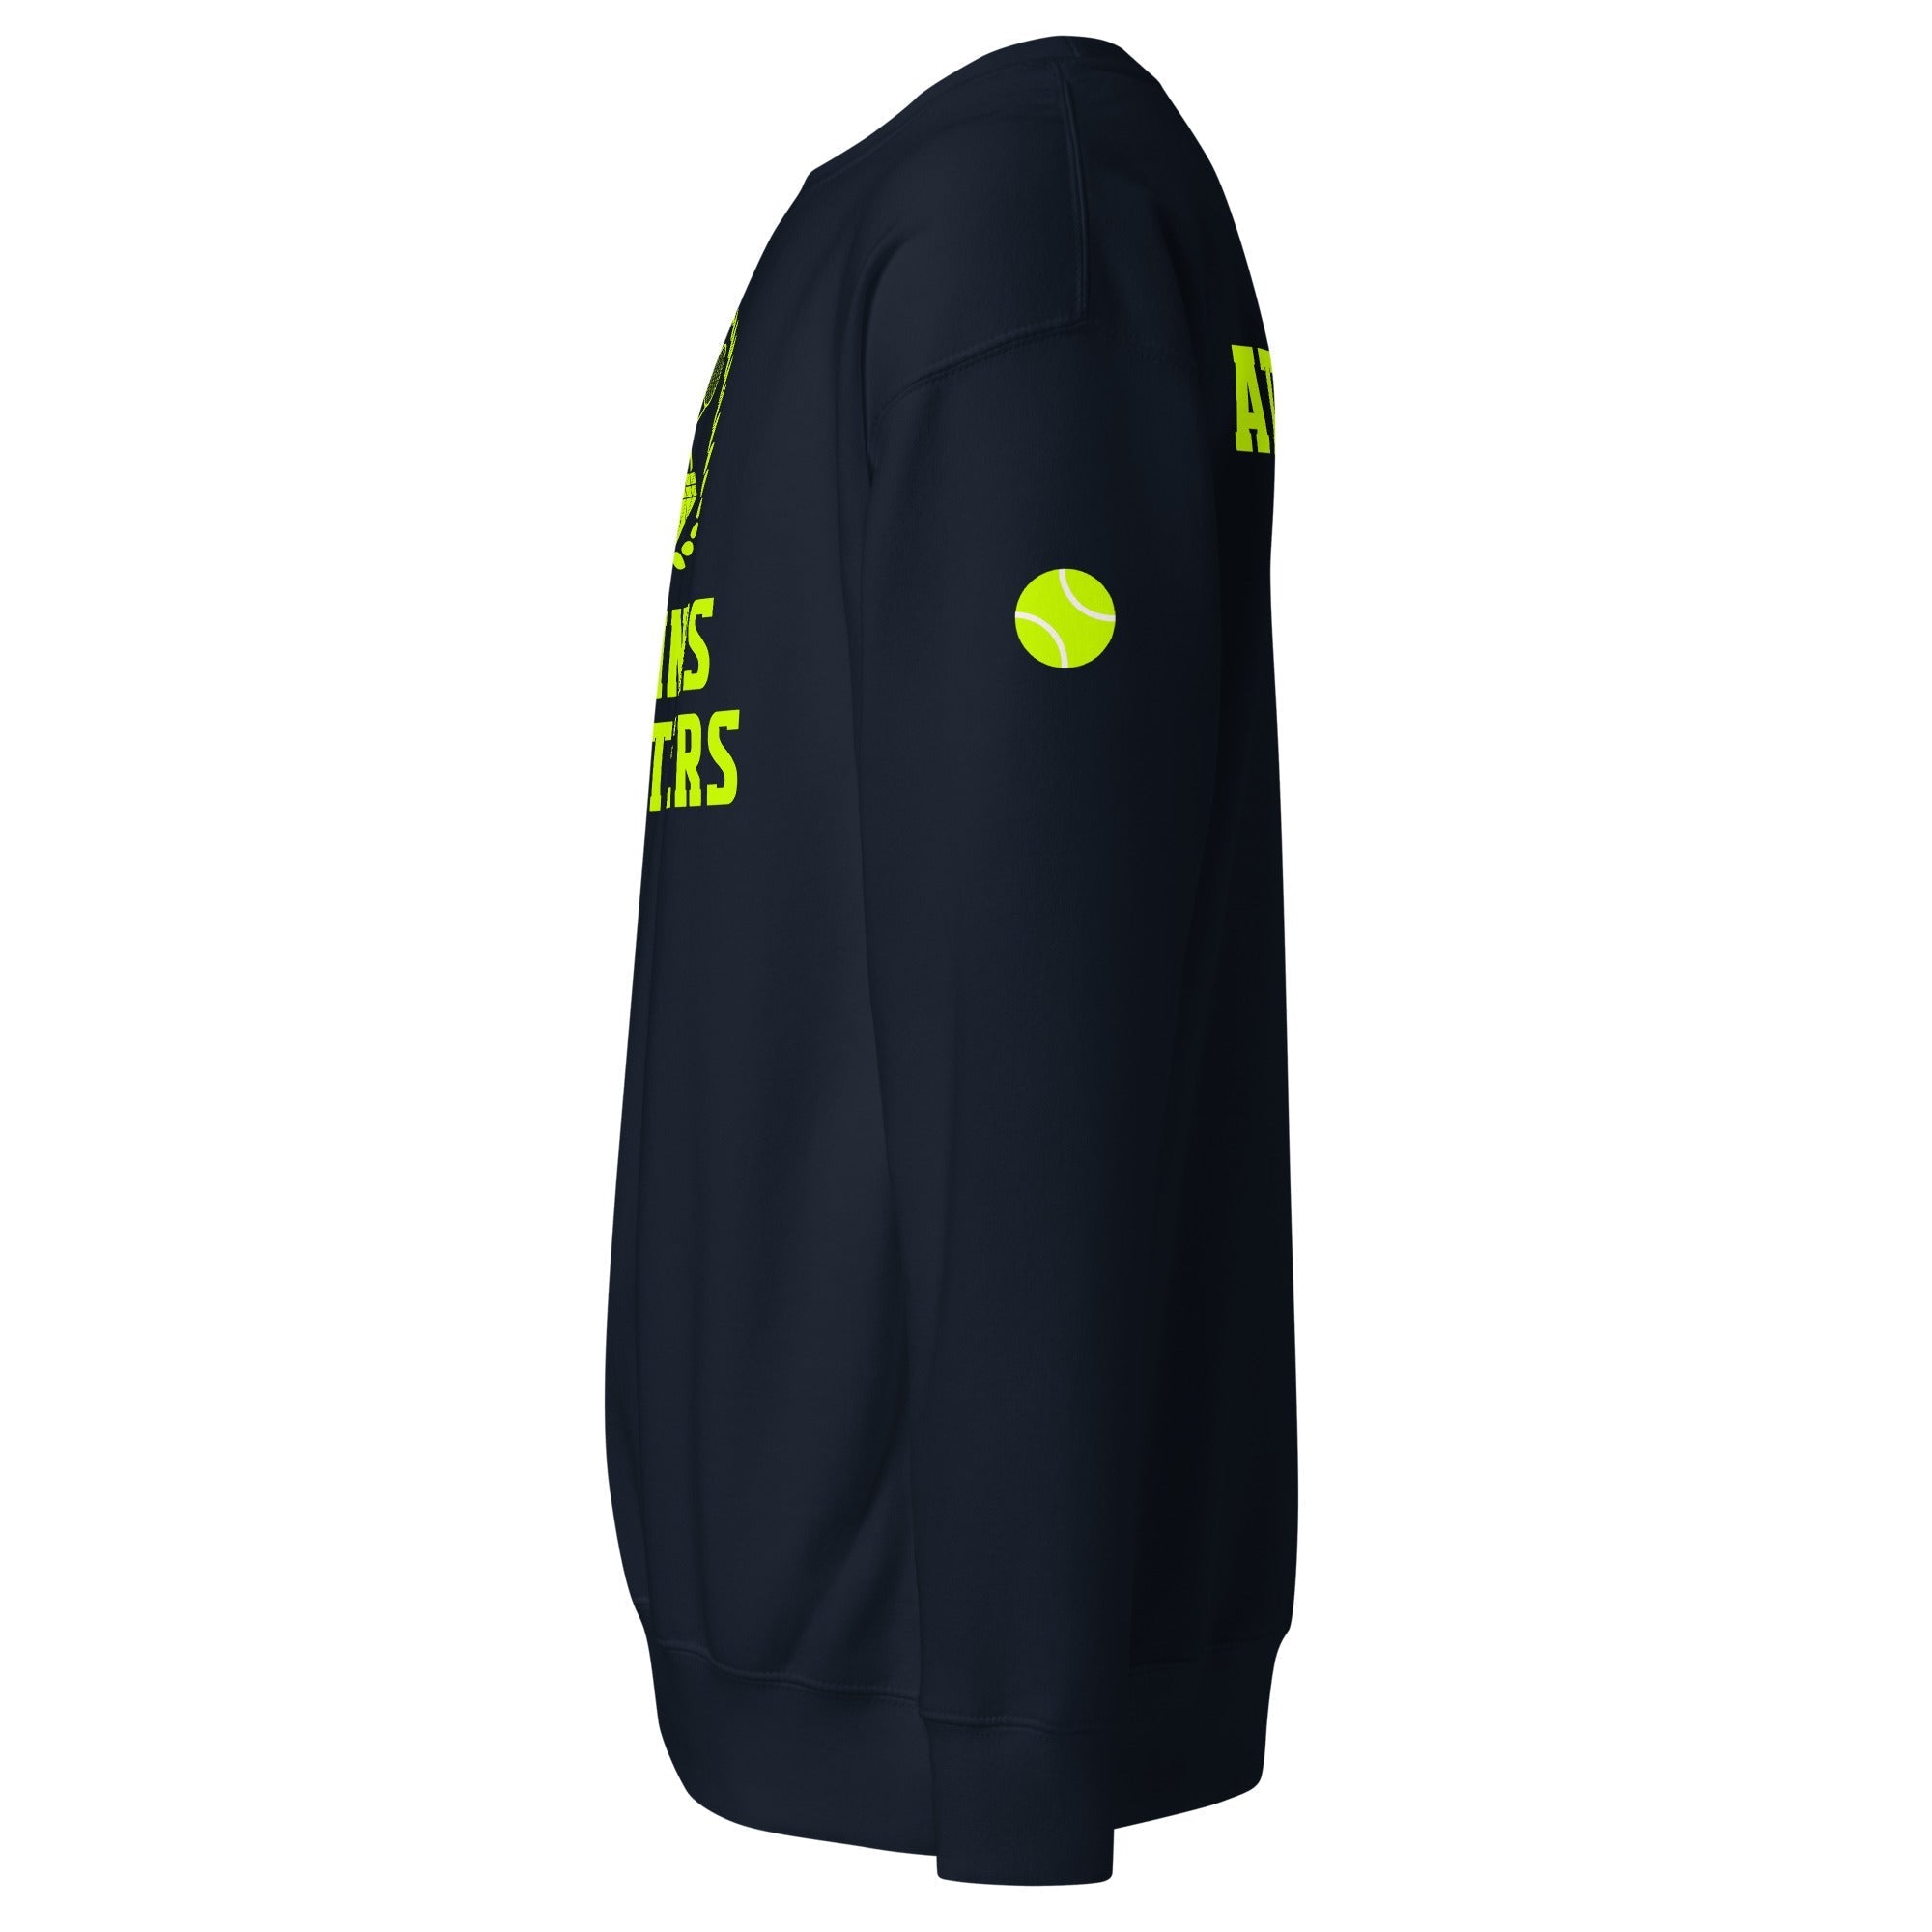 Unisex Premium Sweatshirt - Tennis Masters Atlanta - GRAPHIC T-SHIRTS